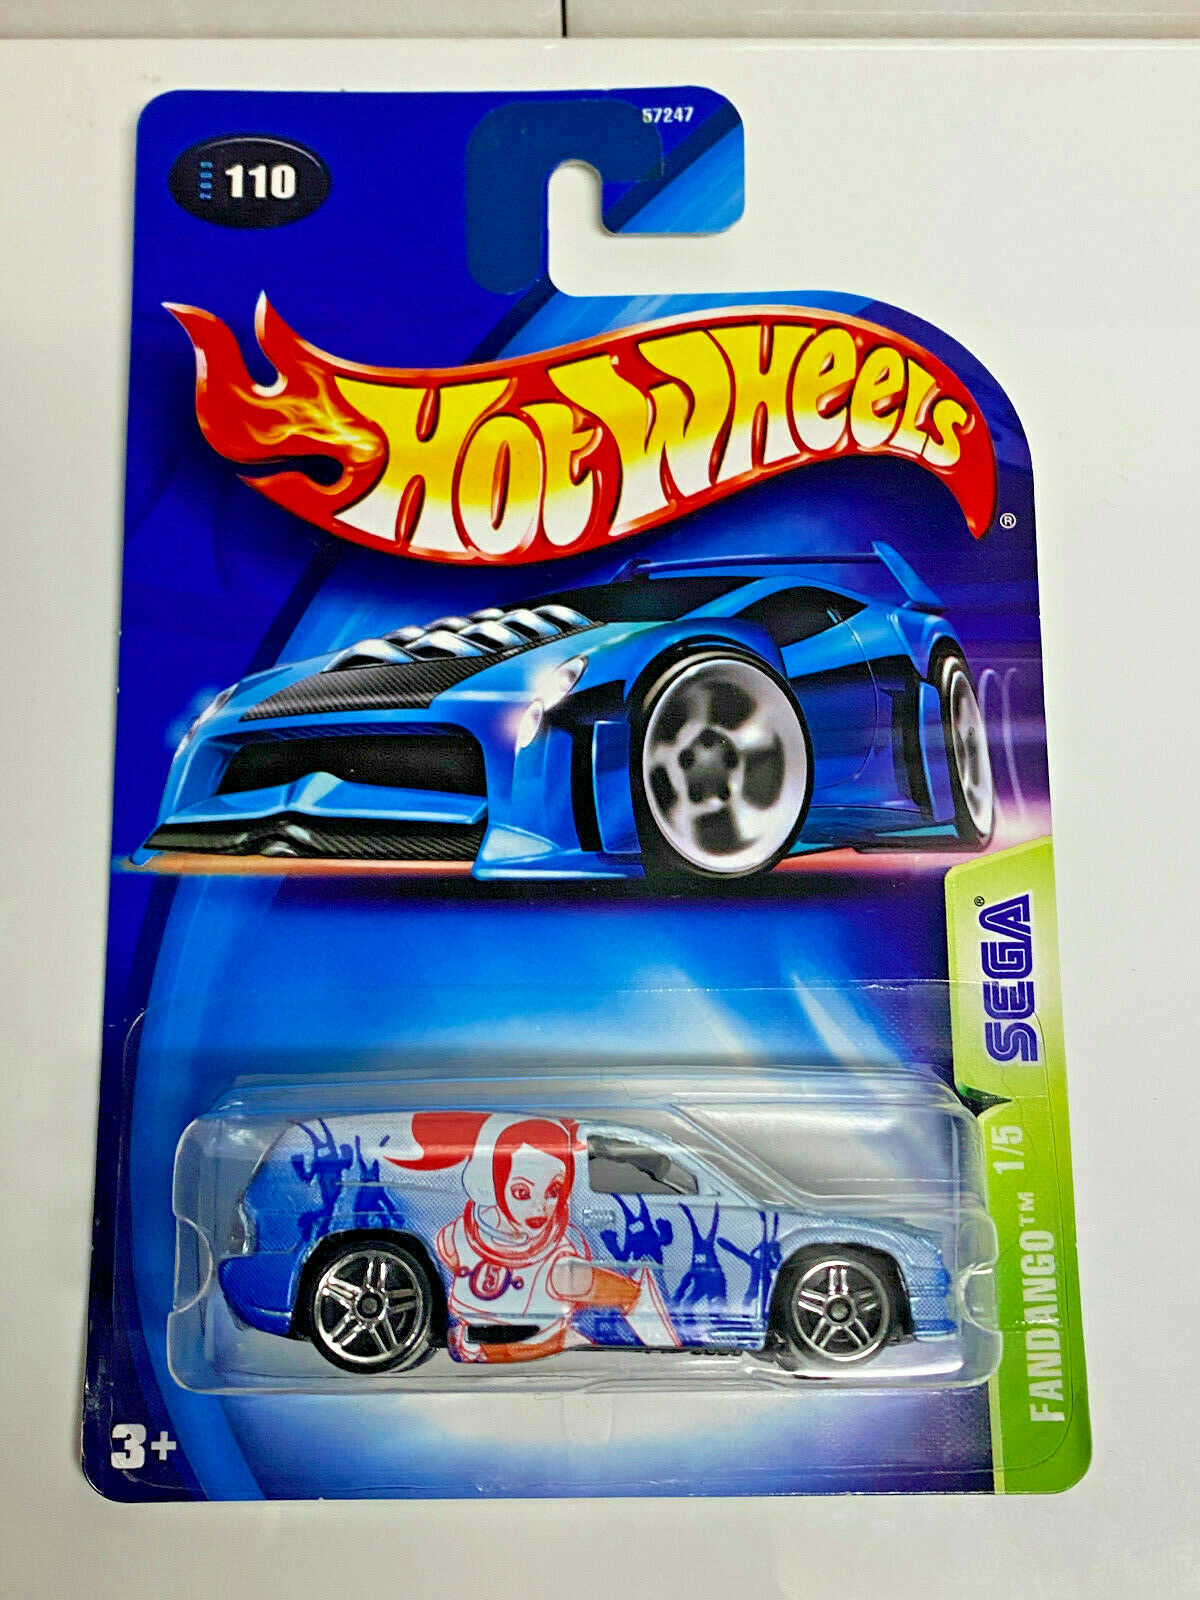 2003 Hot Wheels Sega Series Full Set 5 Cars NIP #110,#111,#112,#113,#114